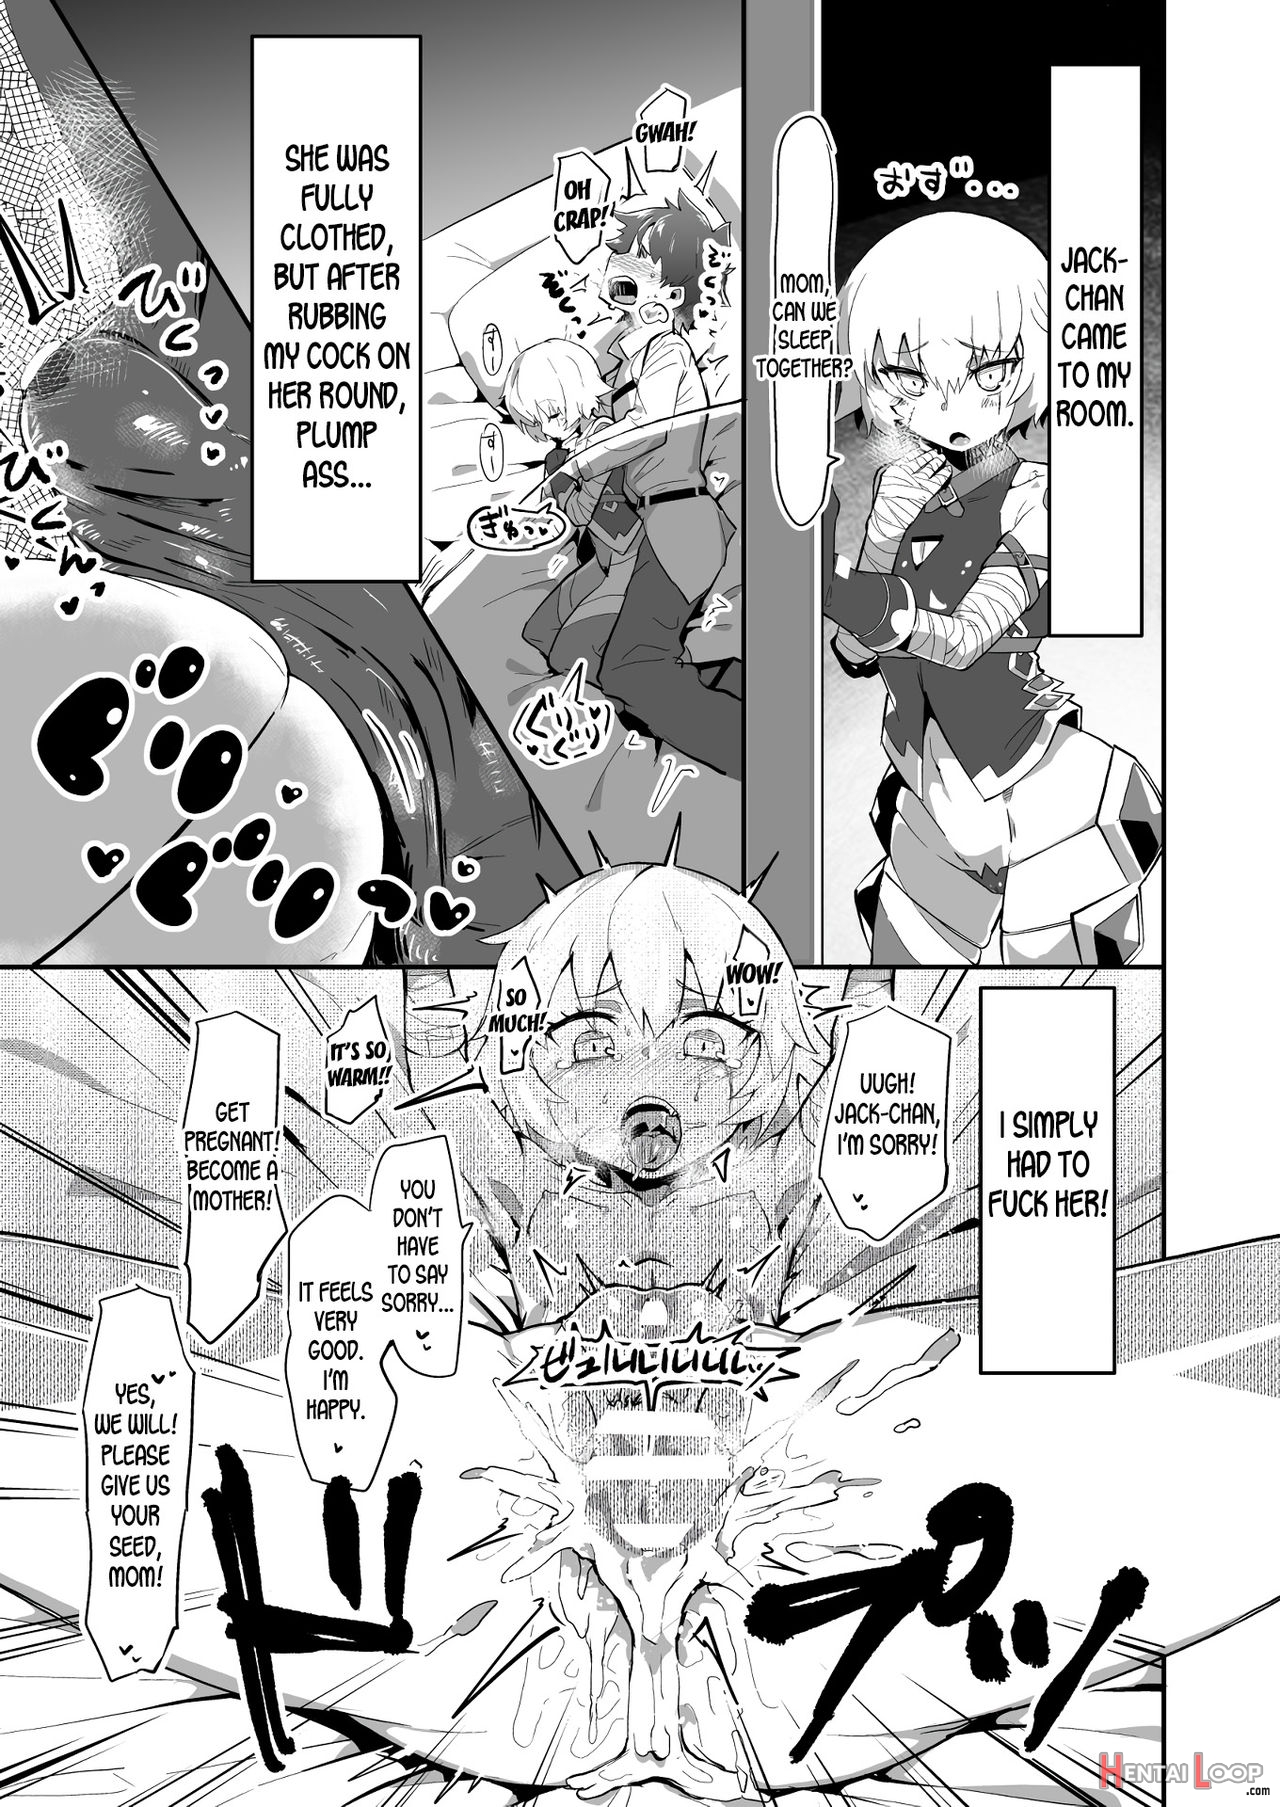 Shinshin-san Random Encounter page 2